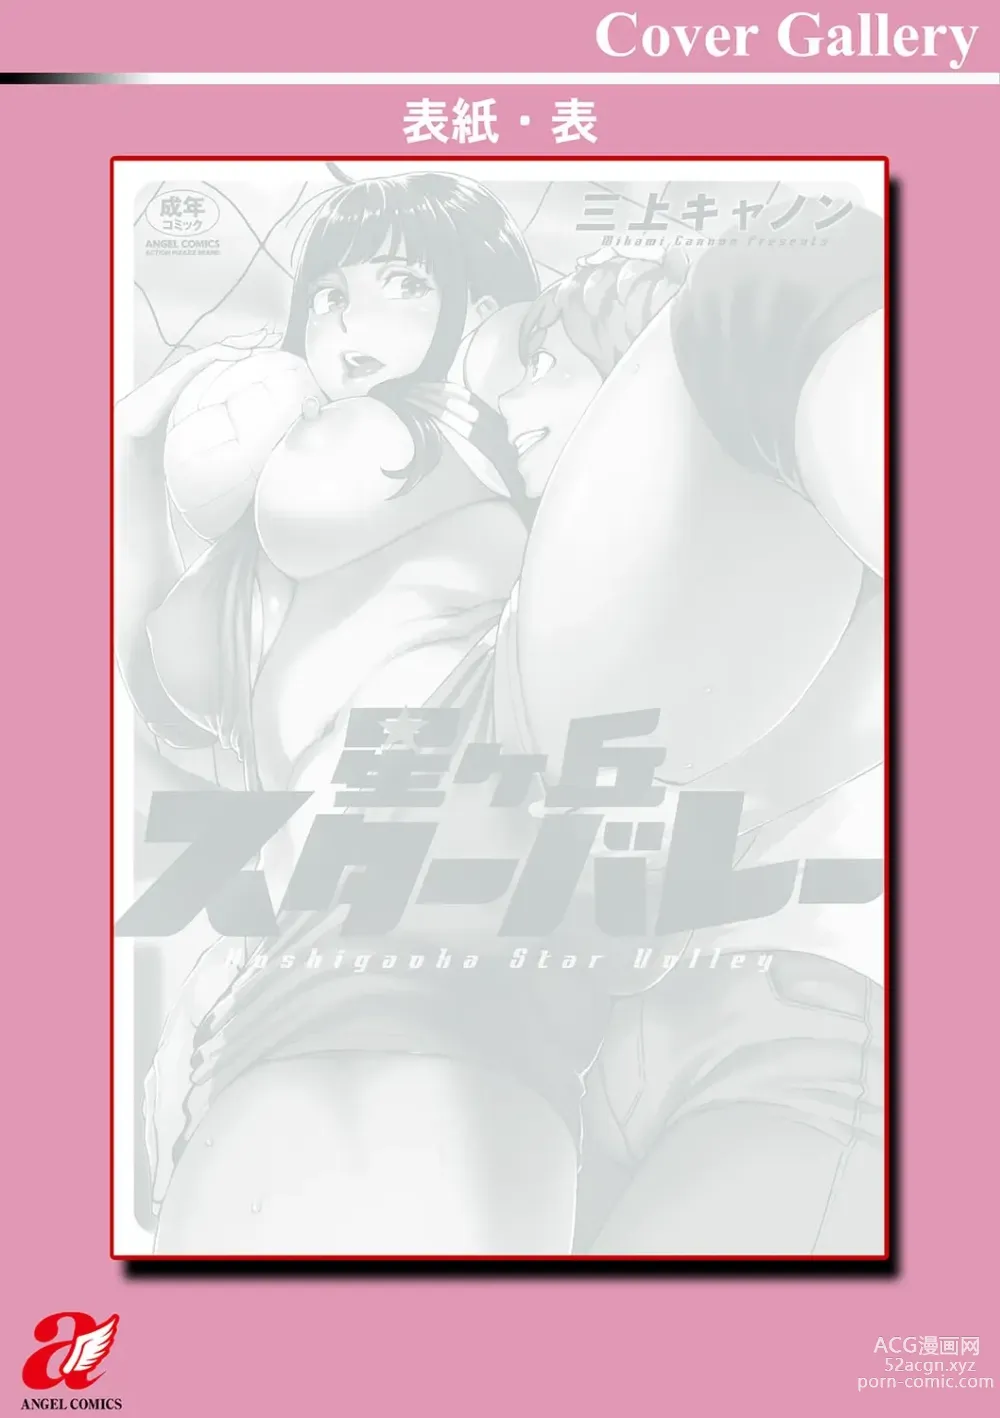 Page 198 of manga Hoshigaoka Star Volley